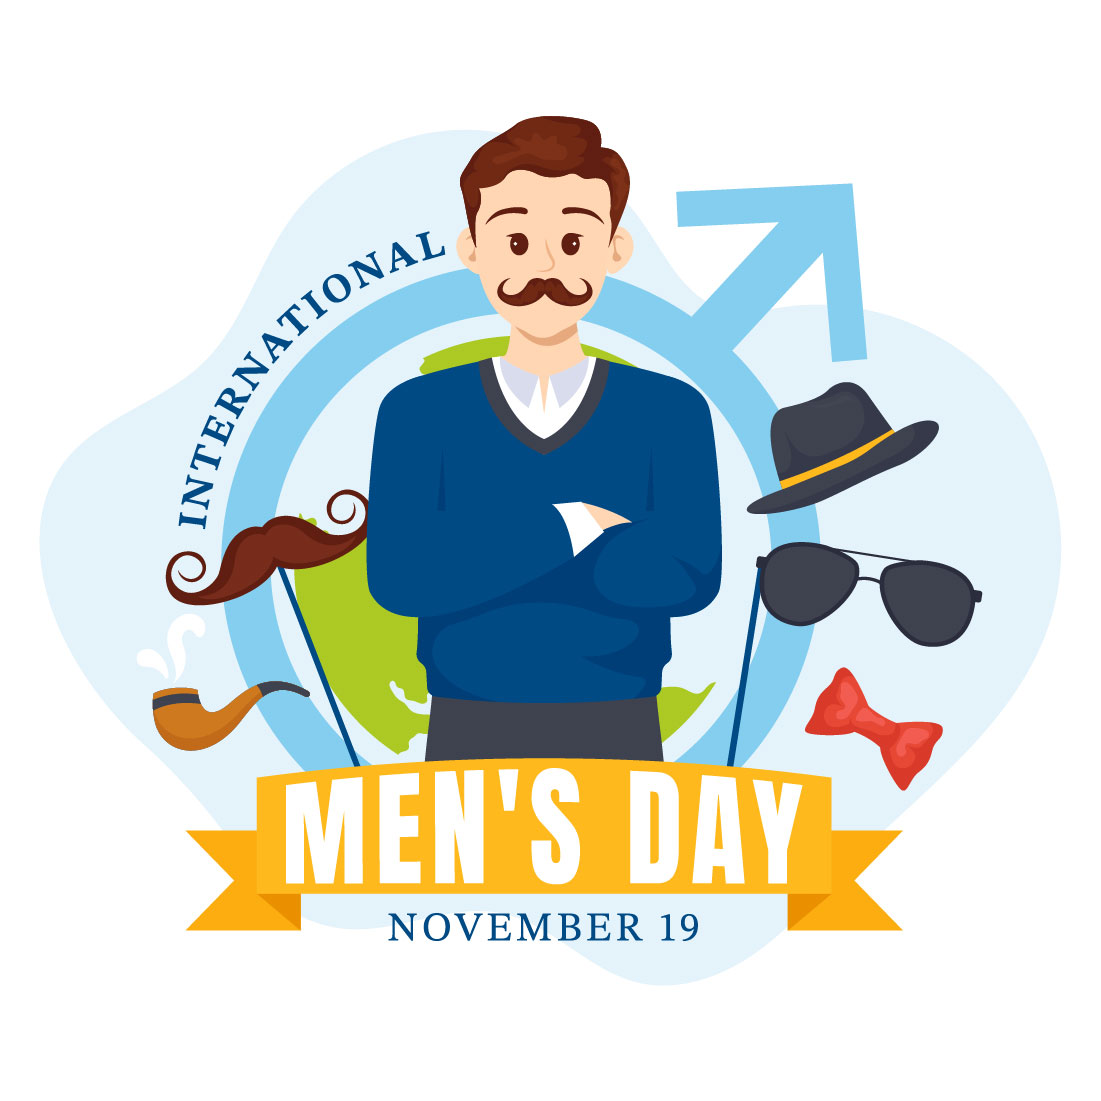 13 International Men's Day Illustration cover image.